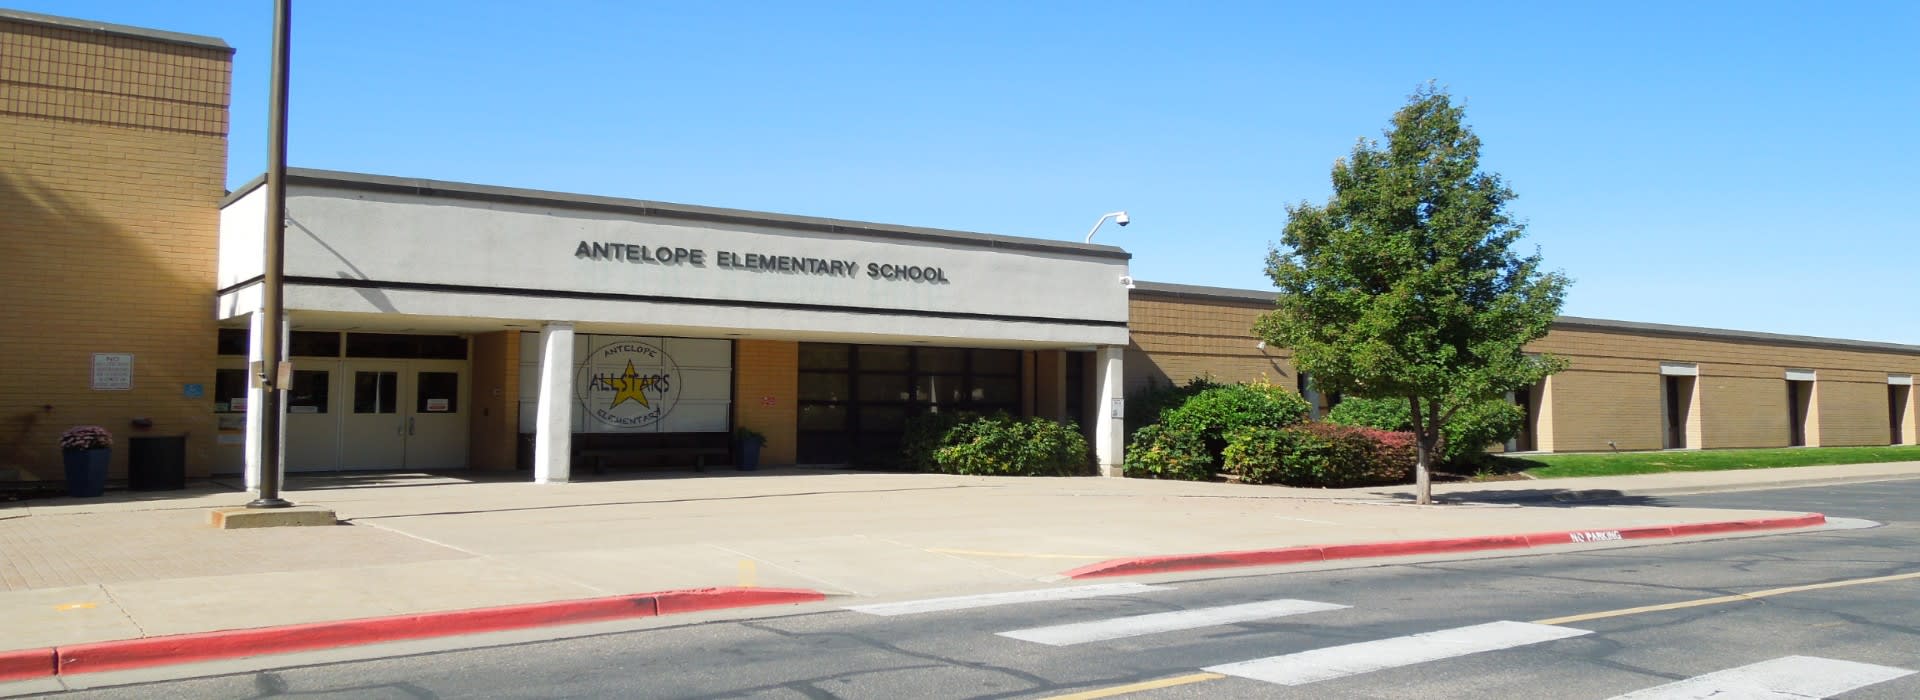 Home Antelope Elementary School - roblox club syracuse jr high school